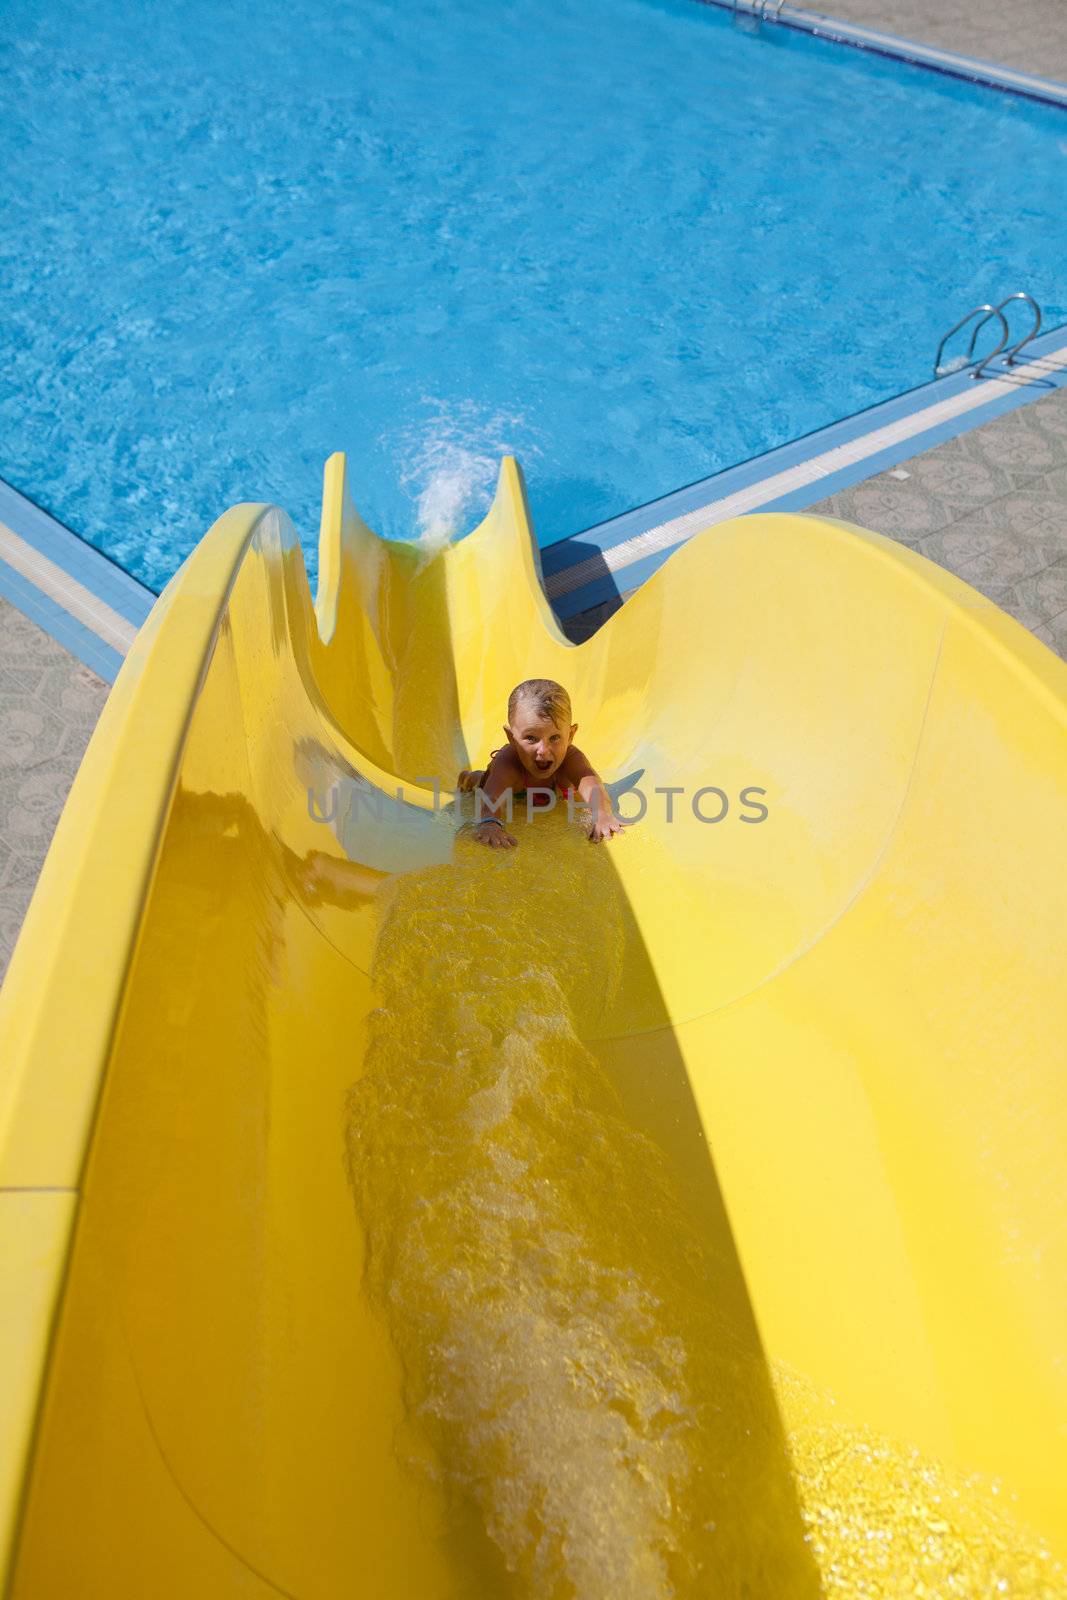 down on slide by vsurkov